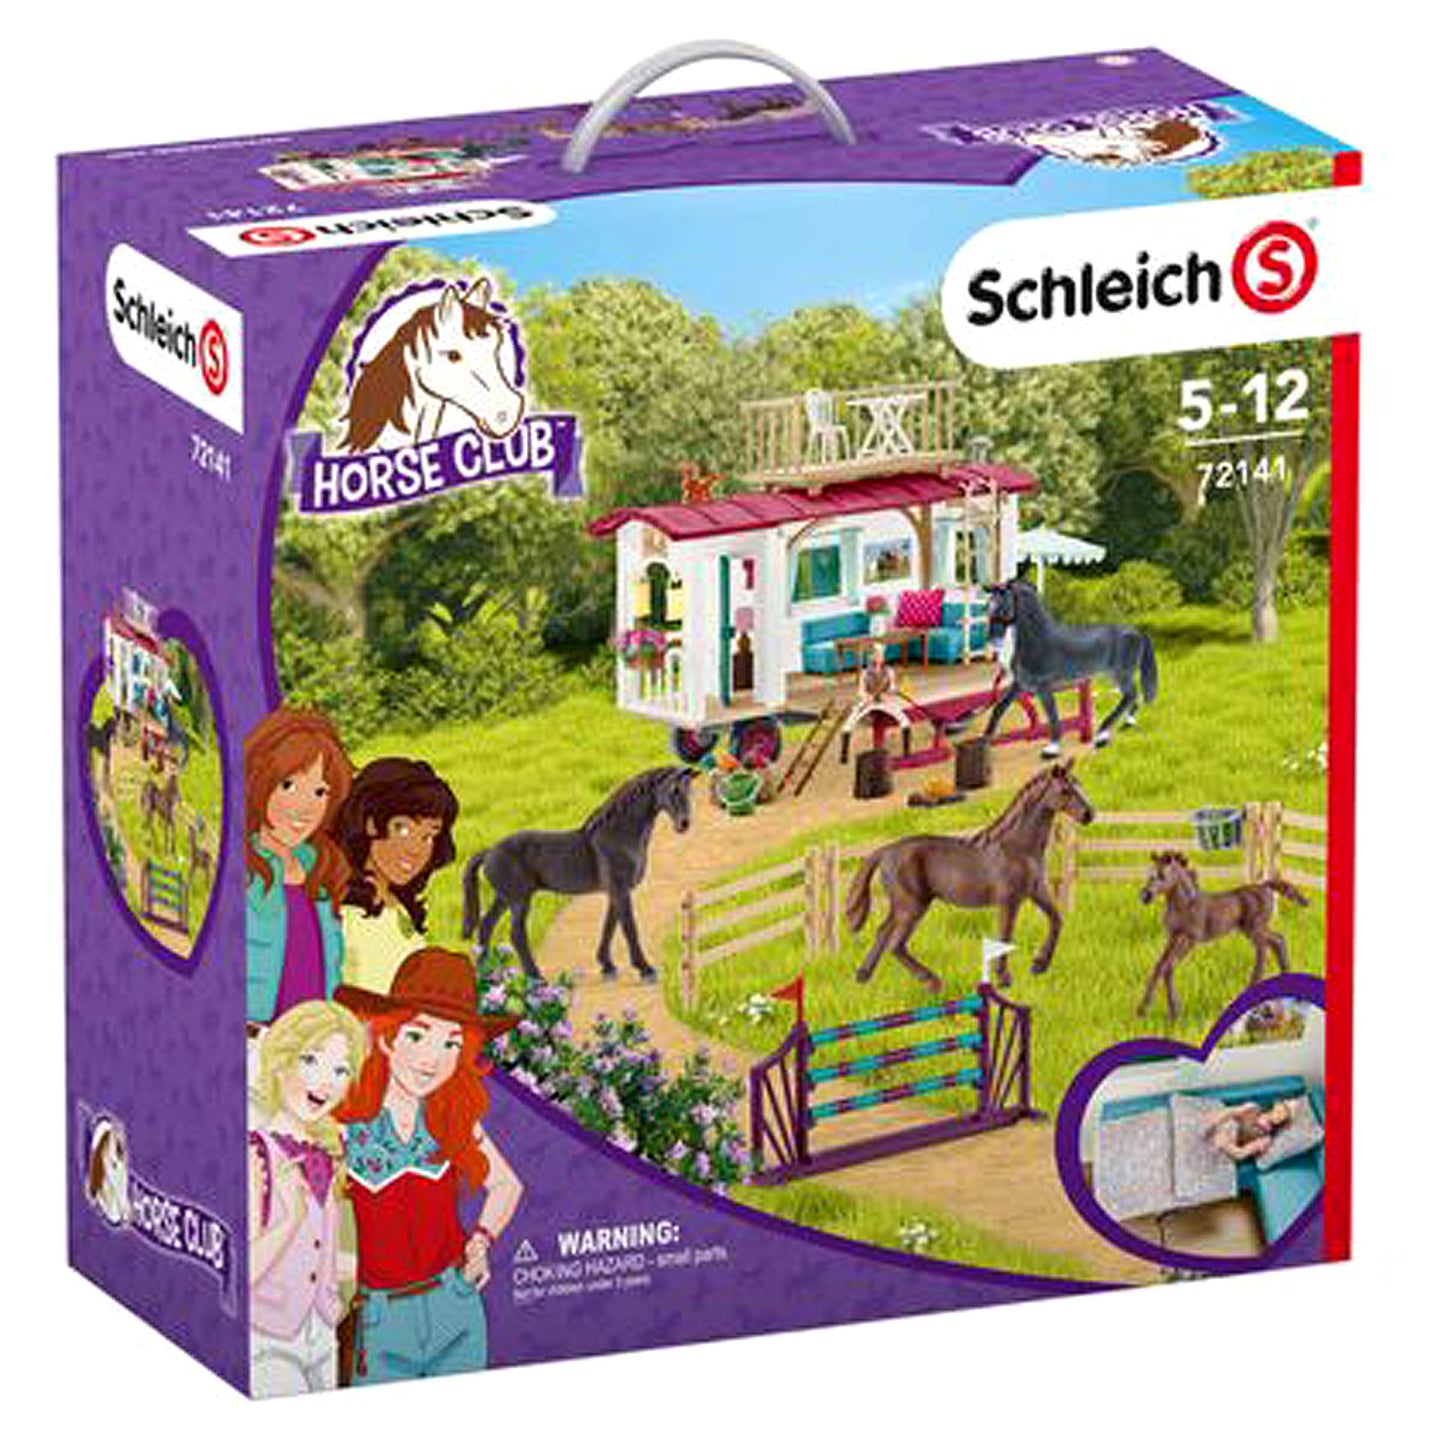 Schleich Large Playset Secret Horse Training at the Horse Club Caravan